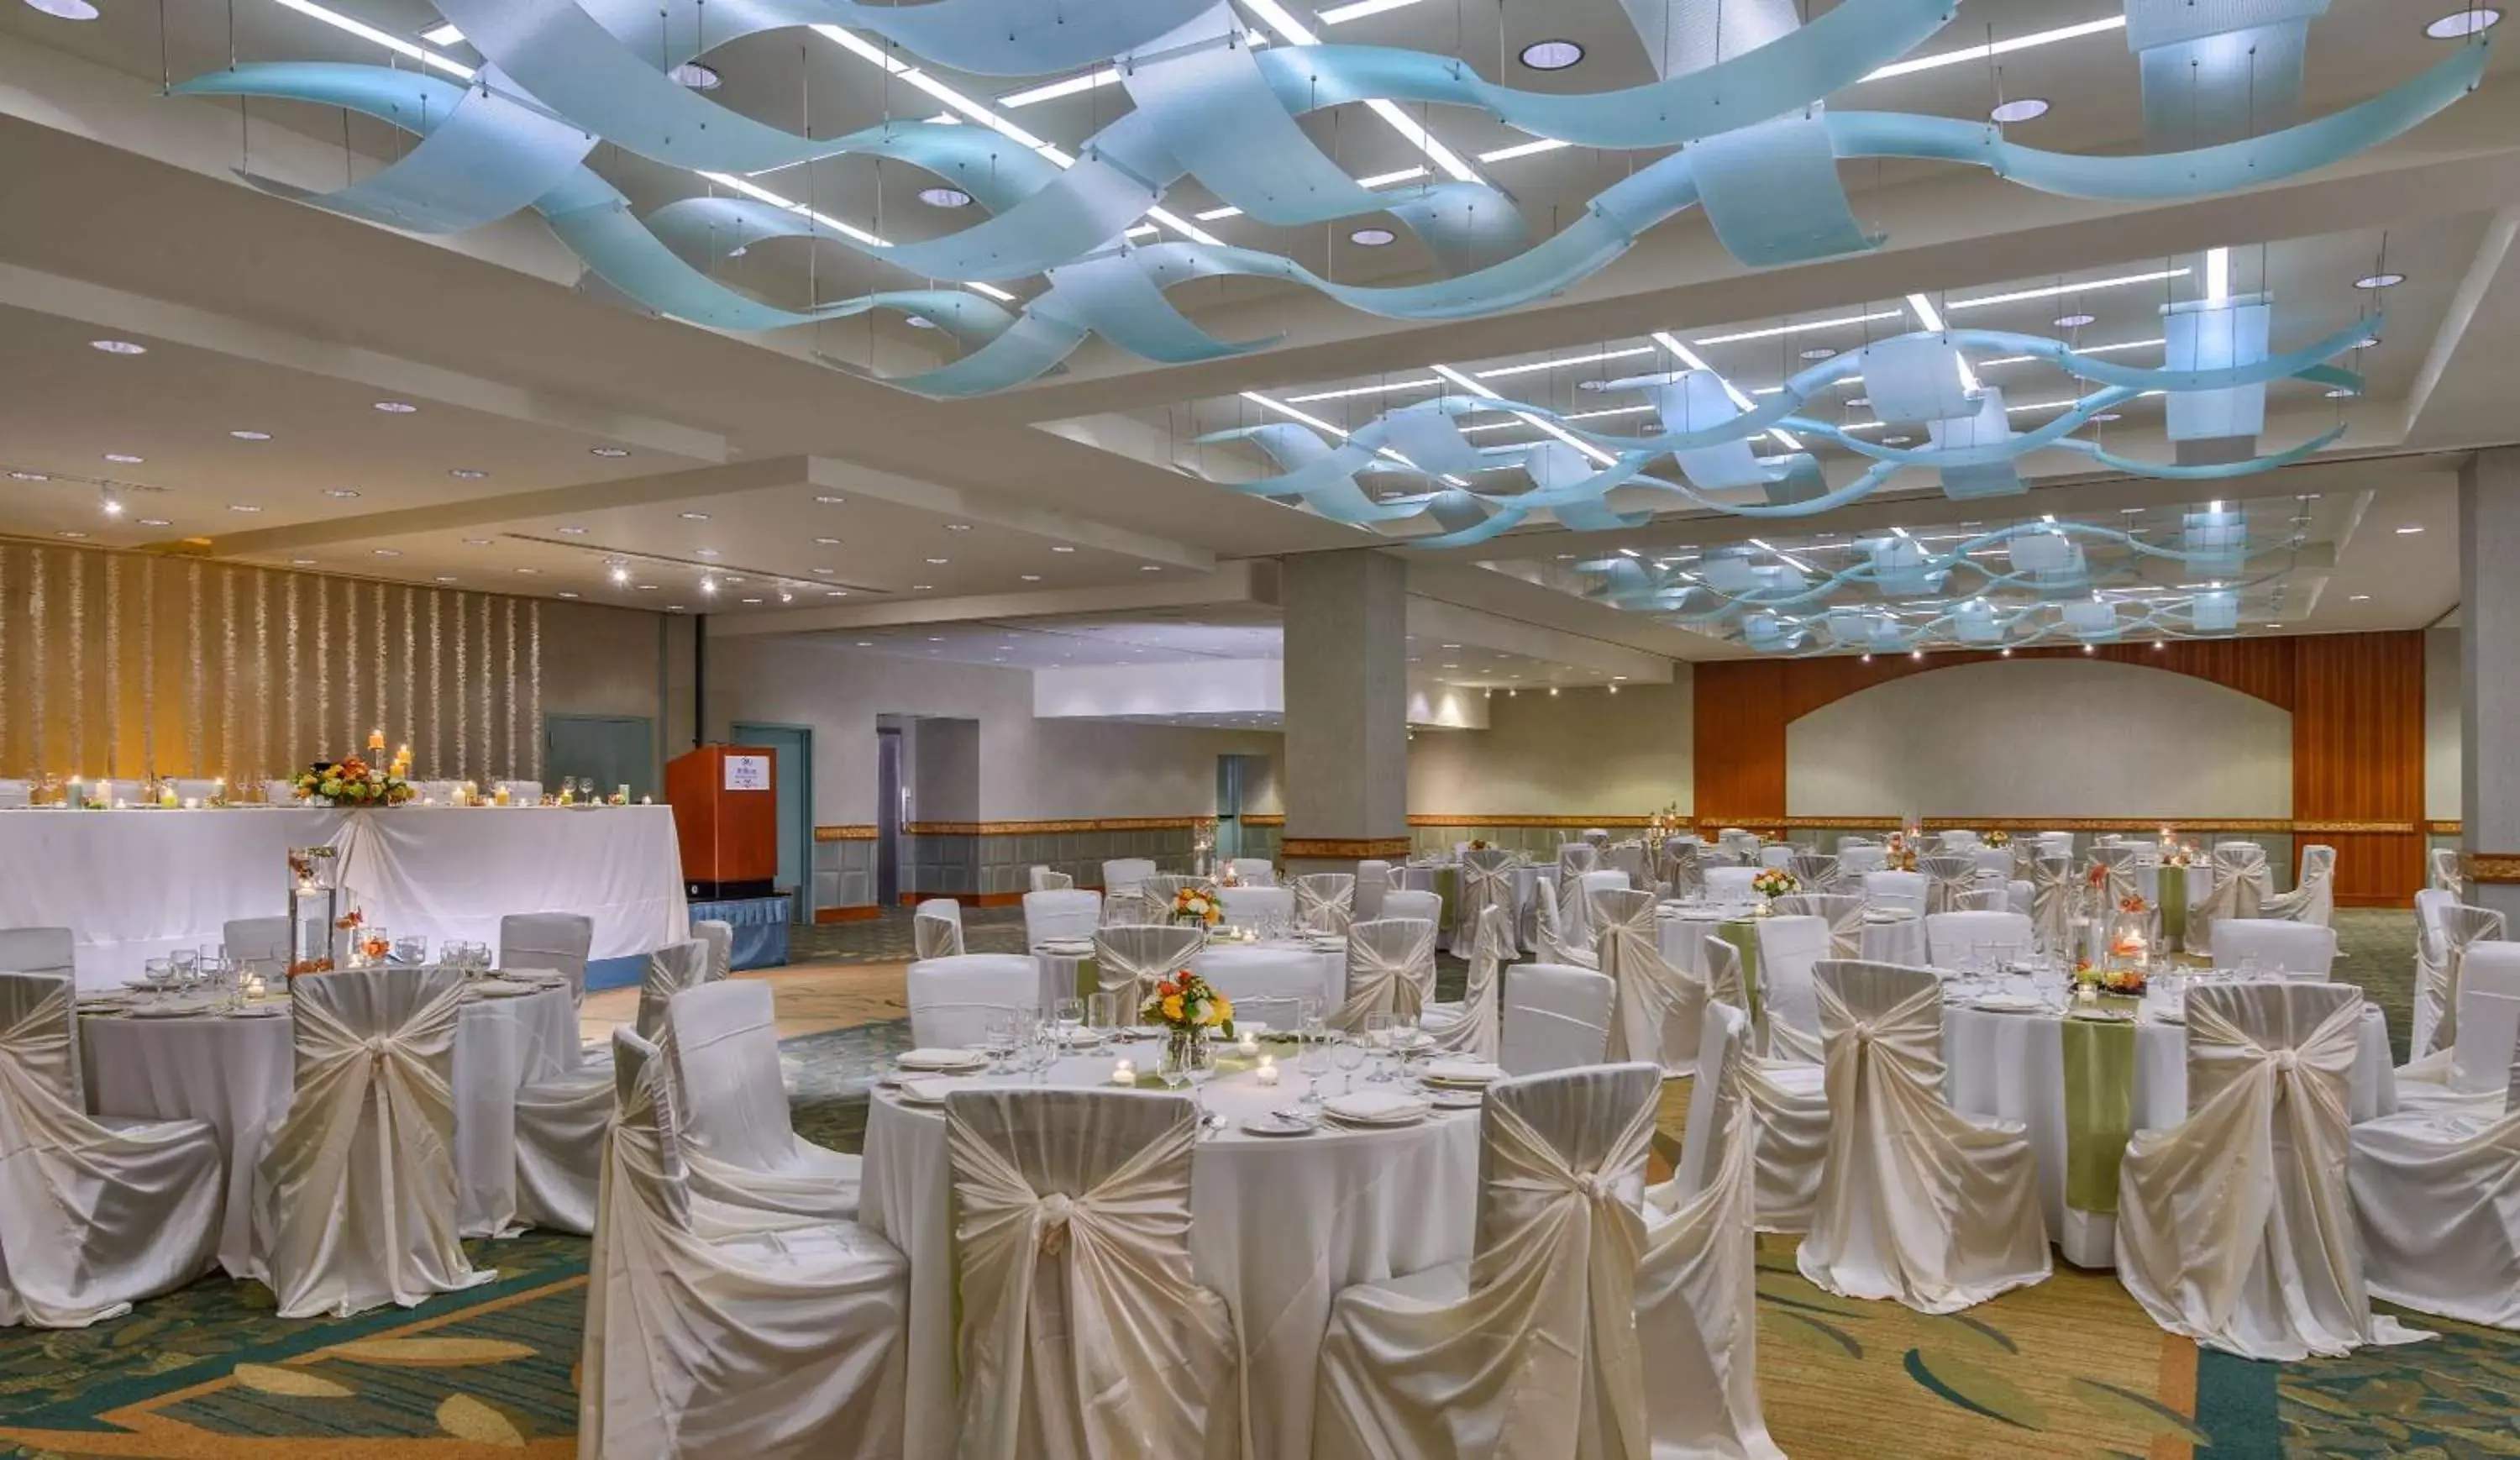 Meeting/conference room, Banquet Facilities in Hilton Waikiki Beach